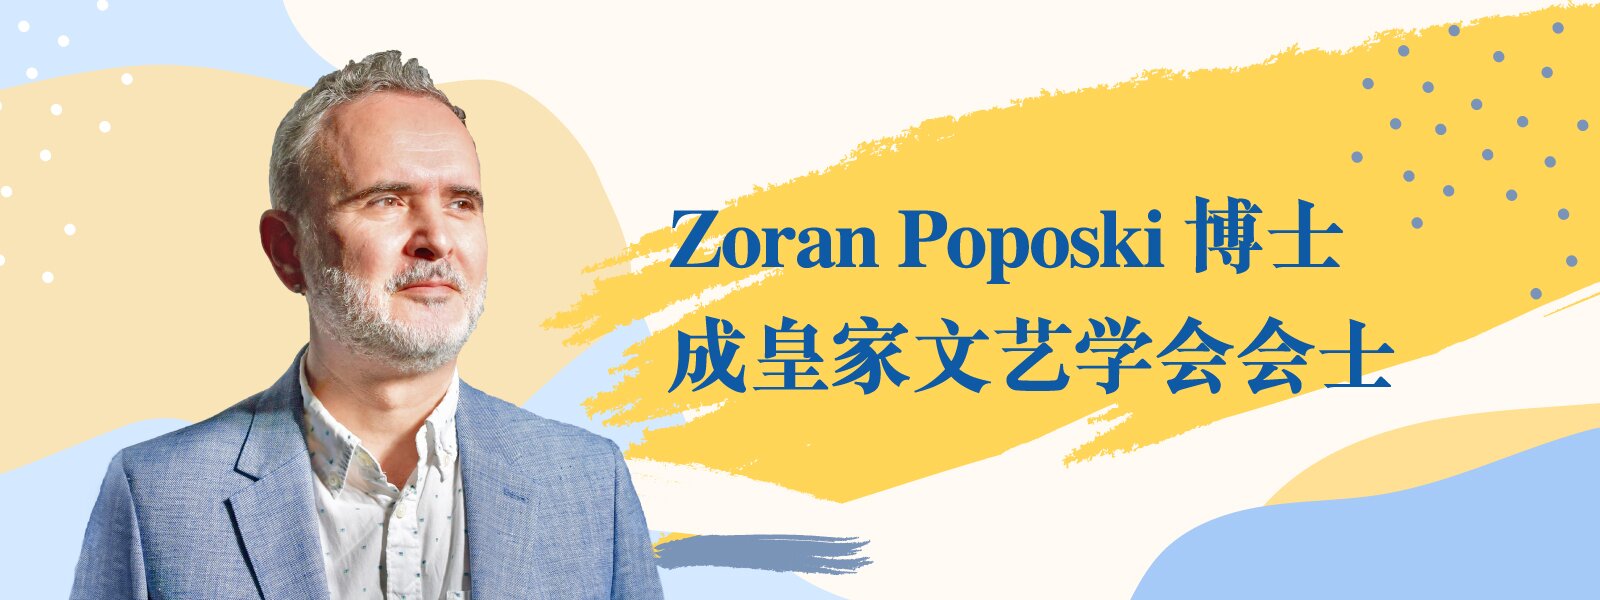 Zoran Poposki博士成皇家文艺学会会士